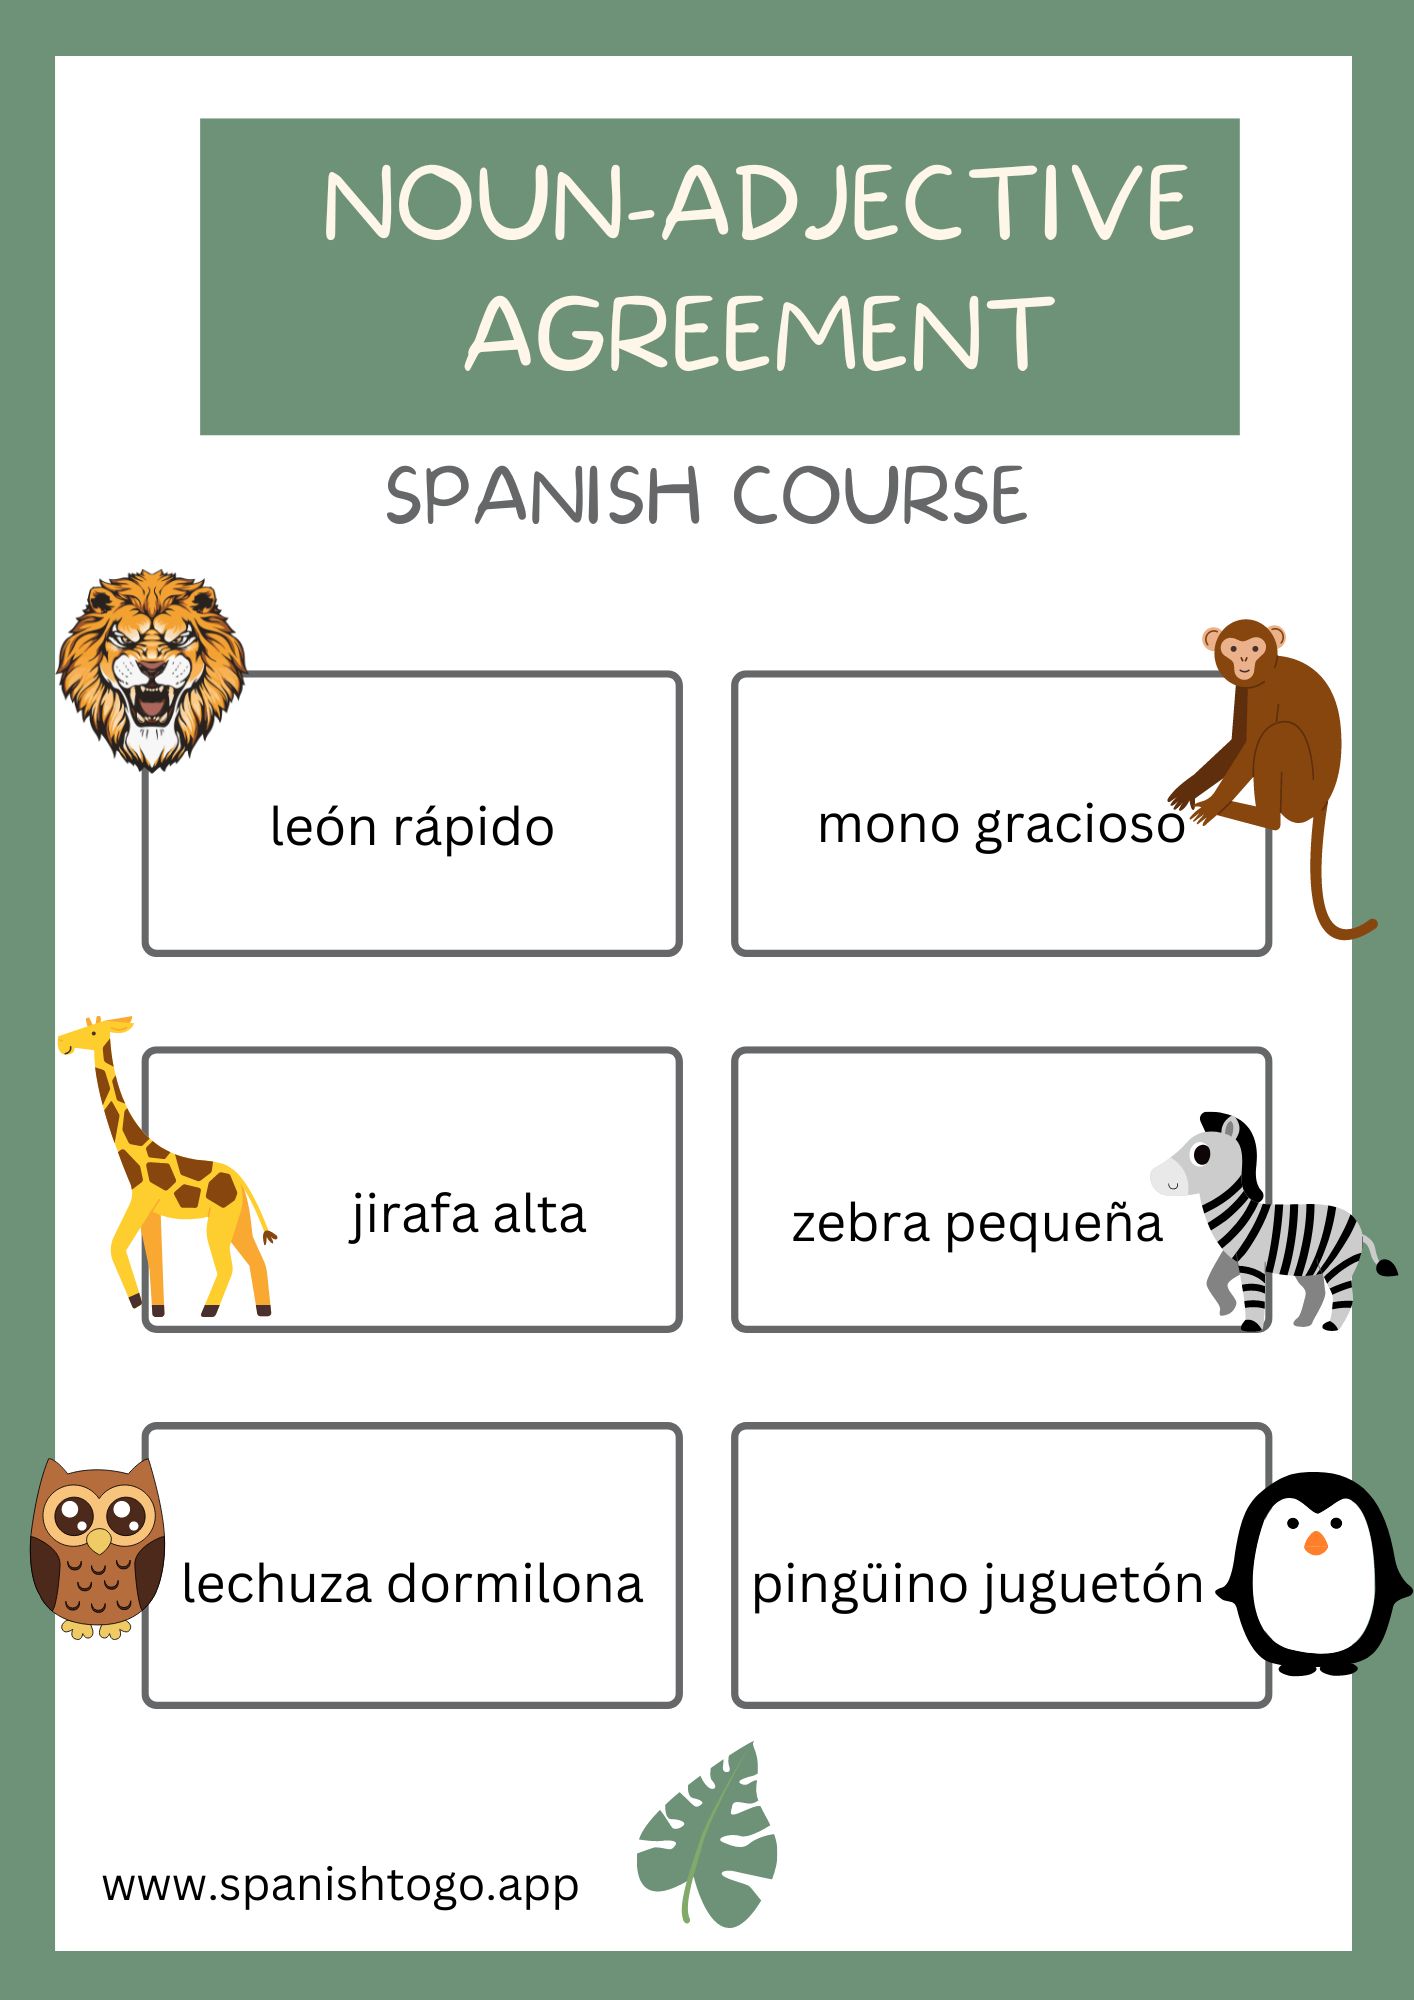 Spanish Noun-Adjective Agreement